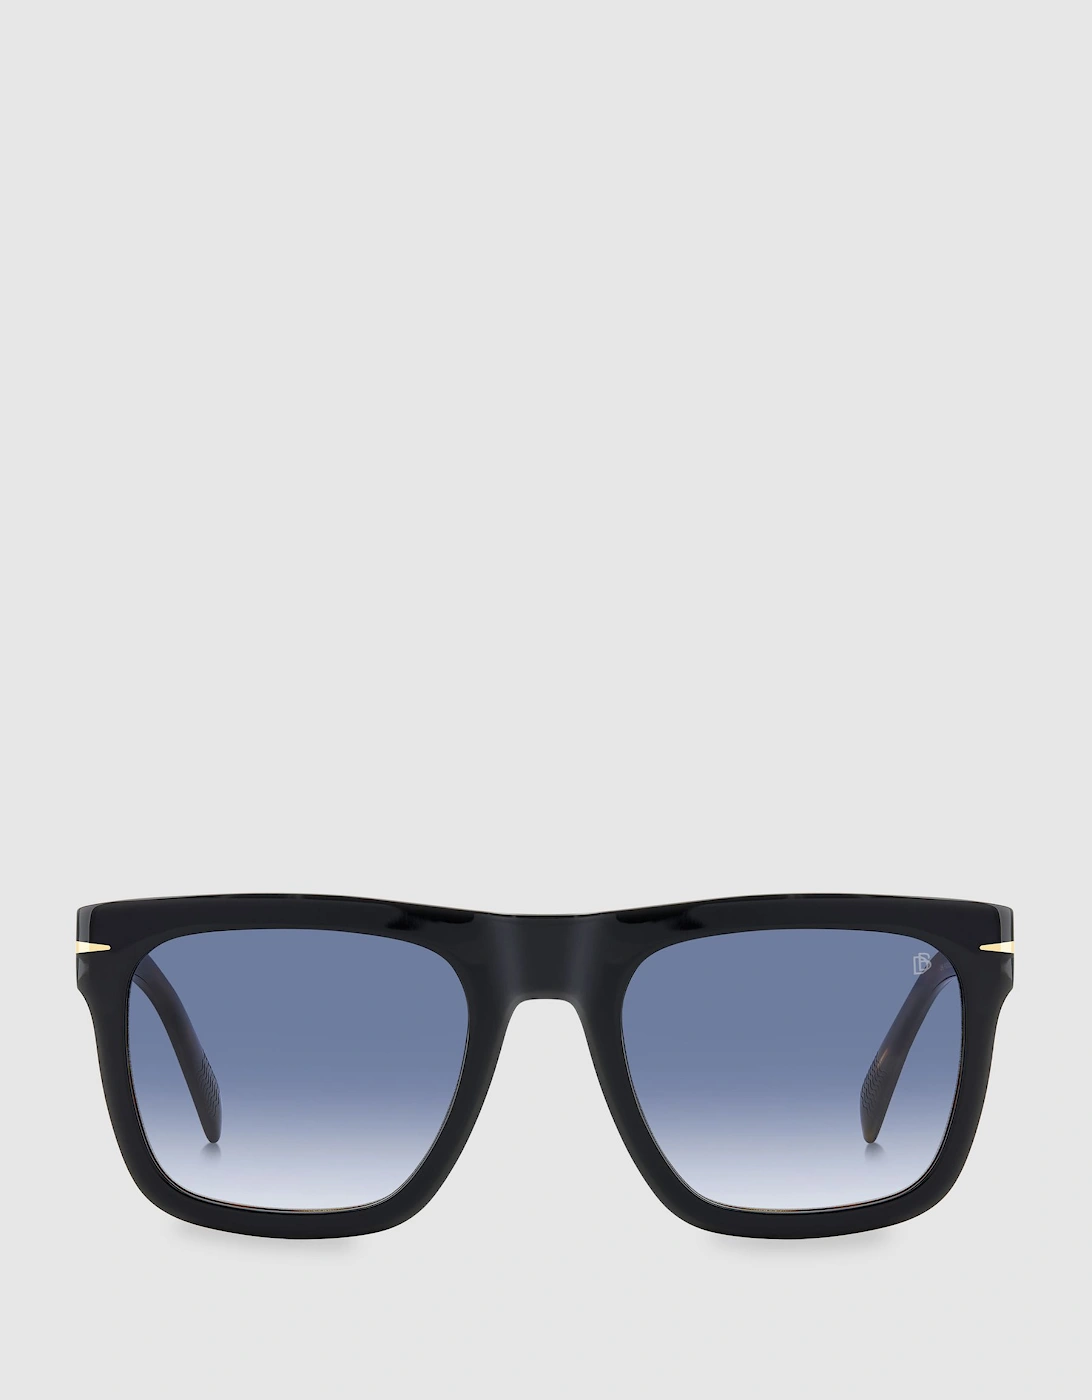 David Beckham Eyewear by Square Sunglasses, 2 of 1